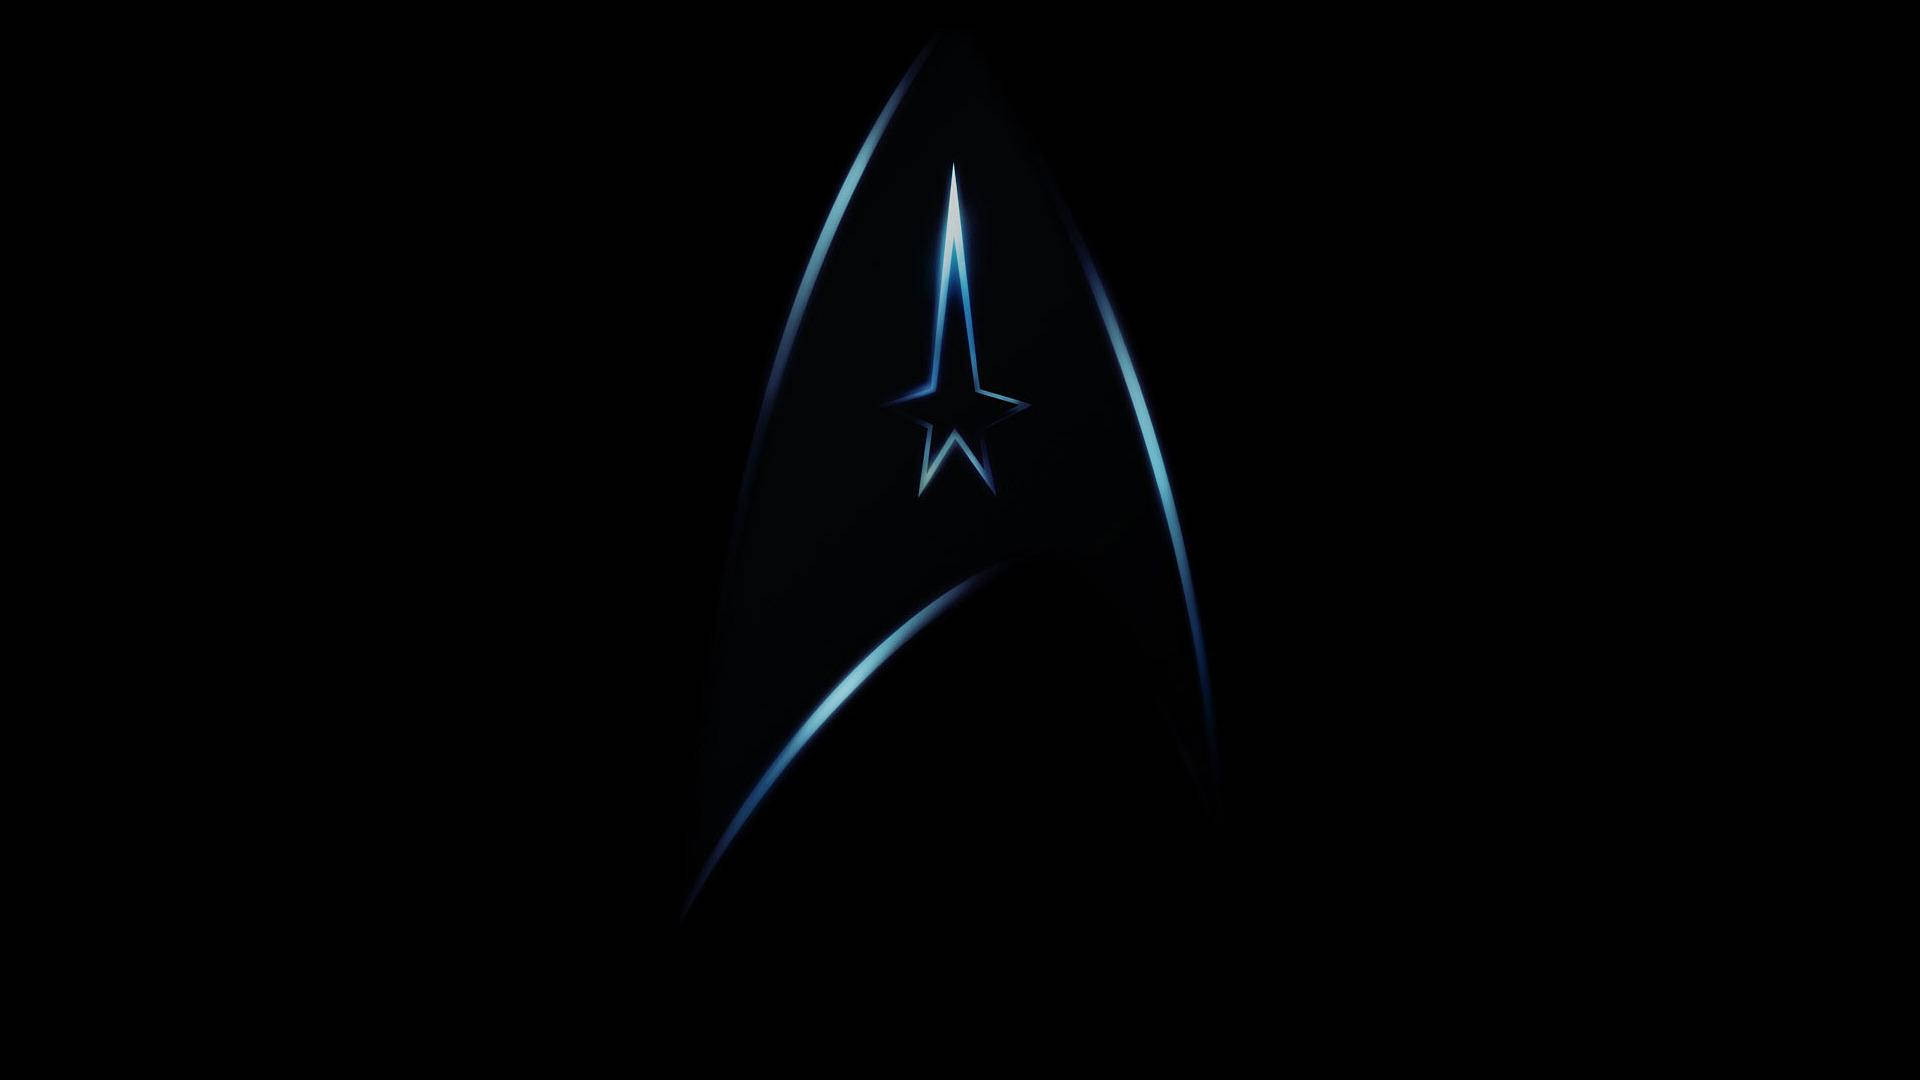 Decent and elegant wallpaper of logo of Star Trek. 